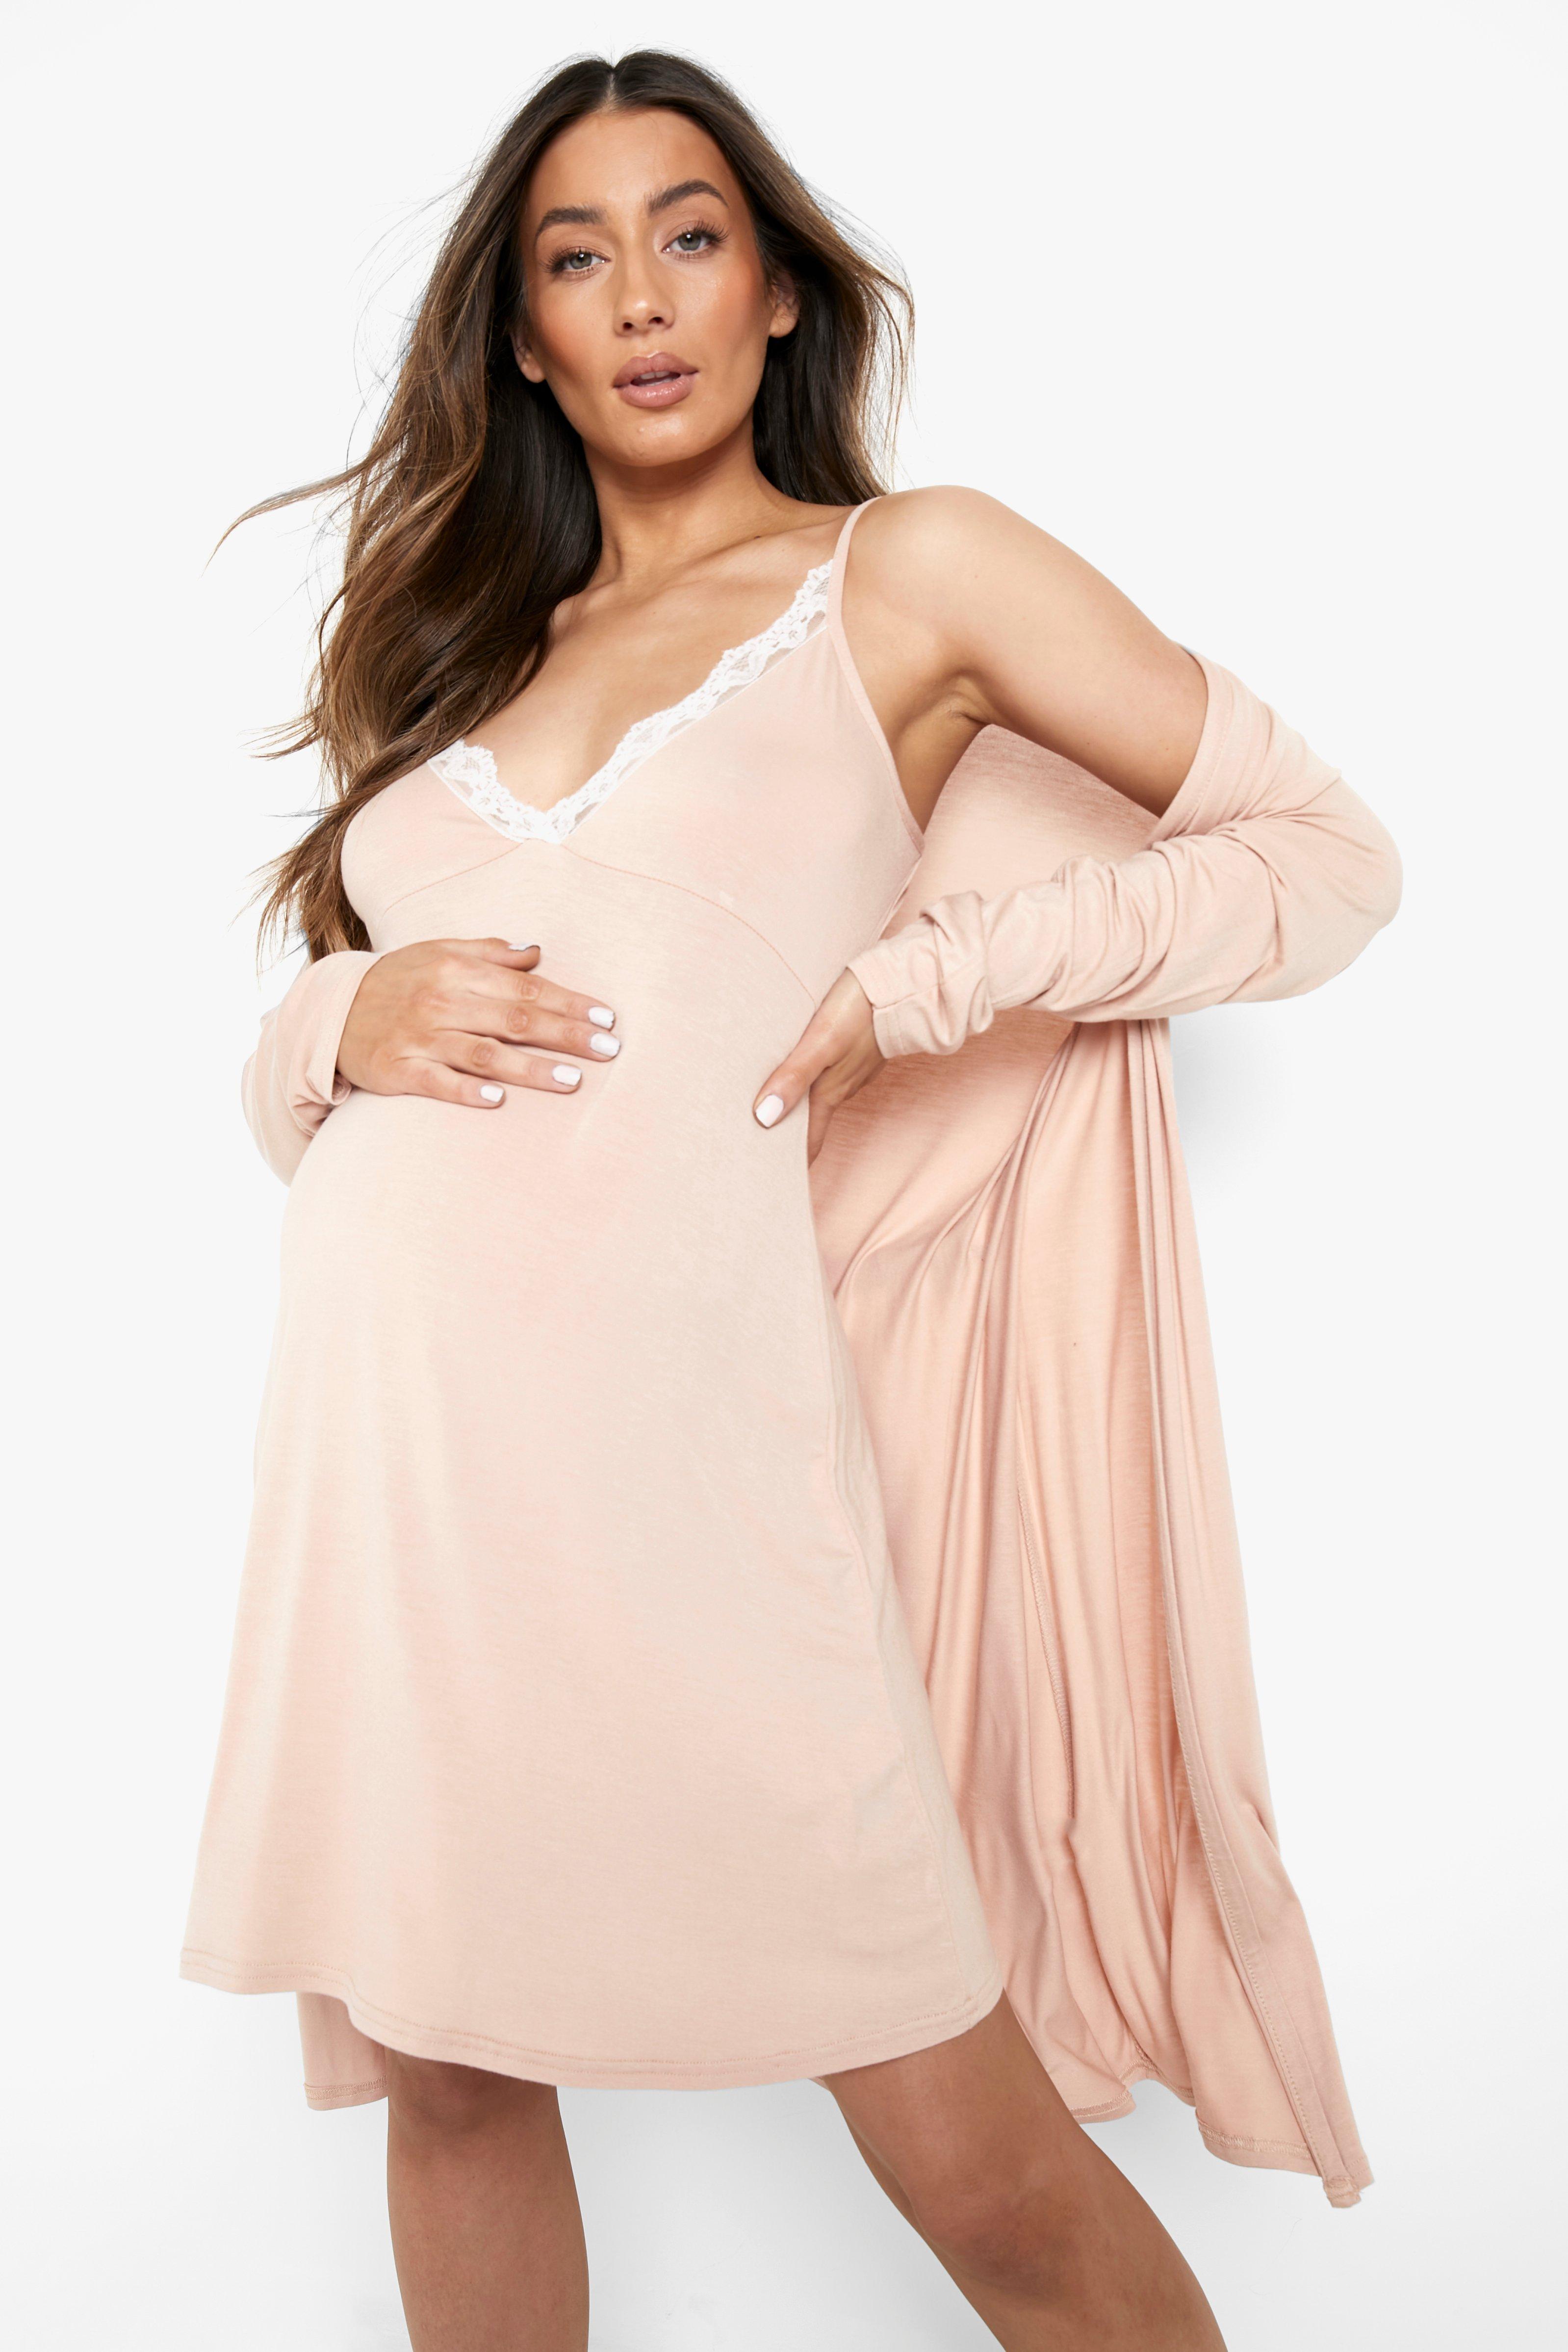 https://media.boohoo.com/i/boohoo/bzz02103_blush_xl_2/female-blush-maternity-lace-trim-nightgown-and-robe